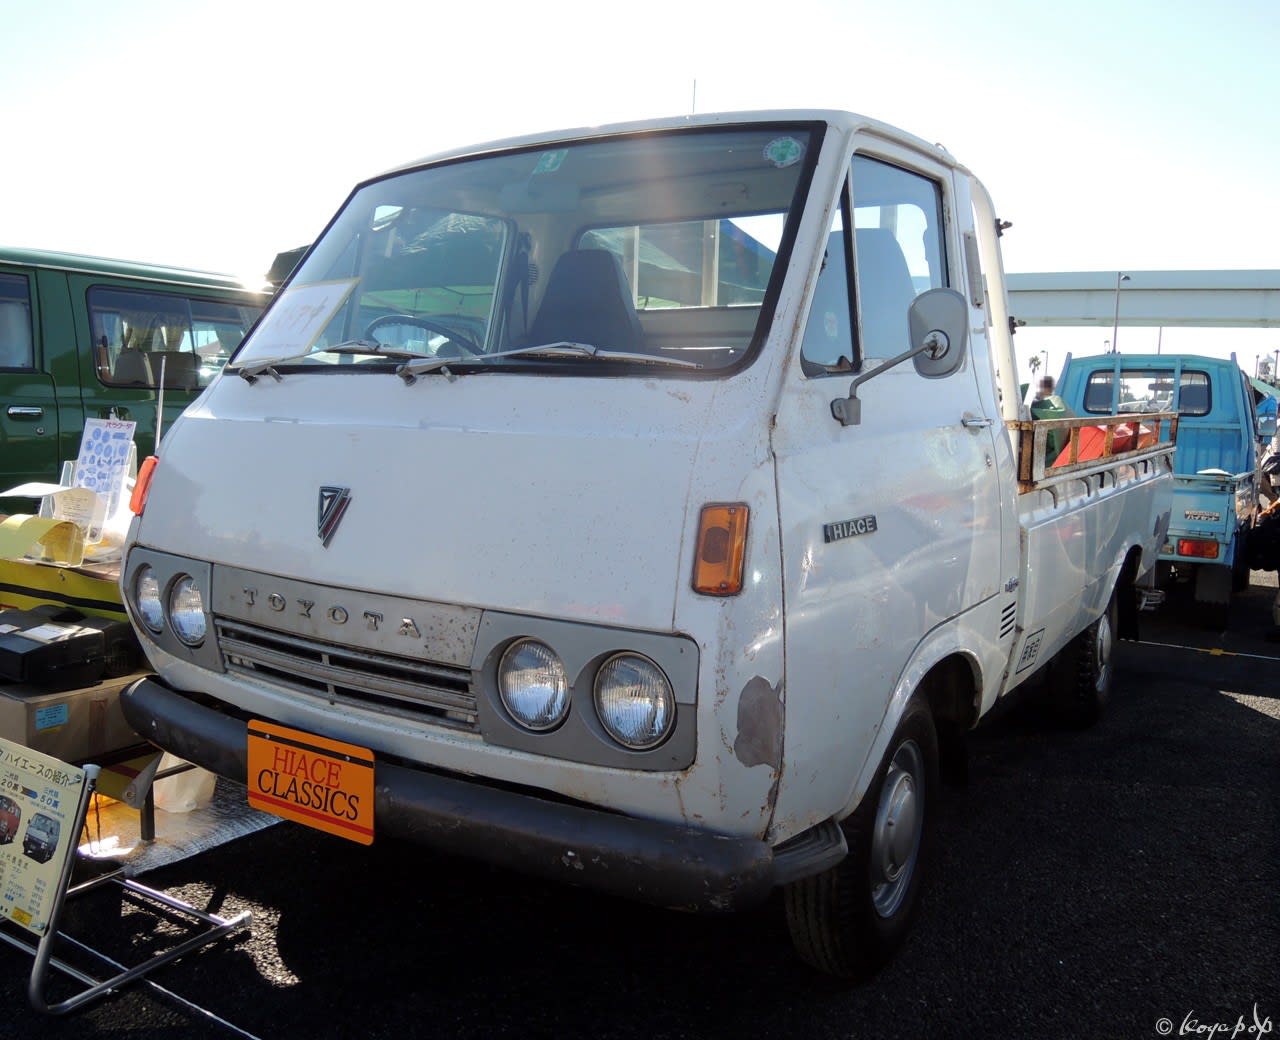 Toyota HiAce 1967- 1967年に誕生したトヨタ ハイエース